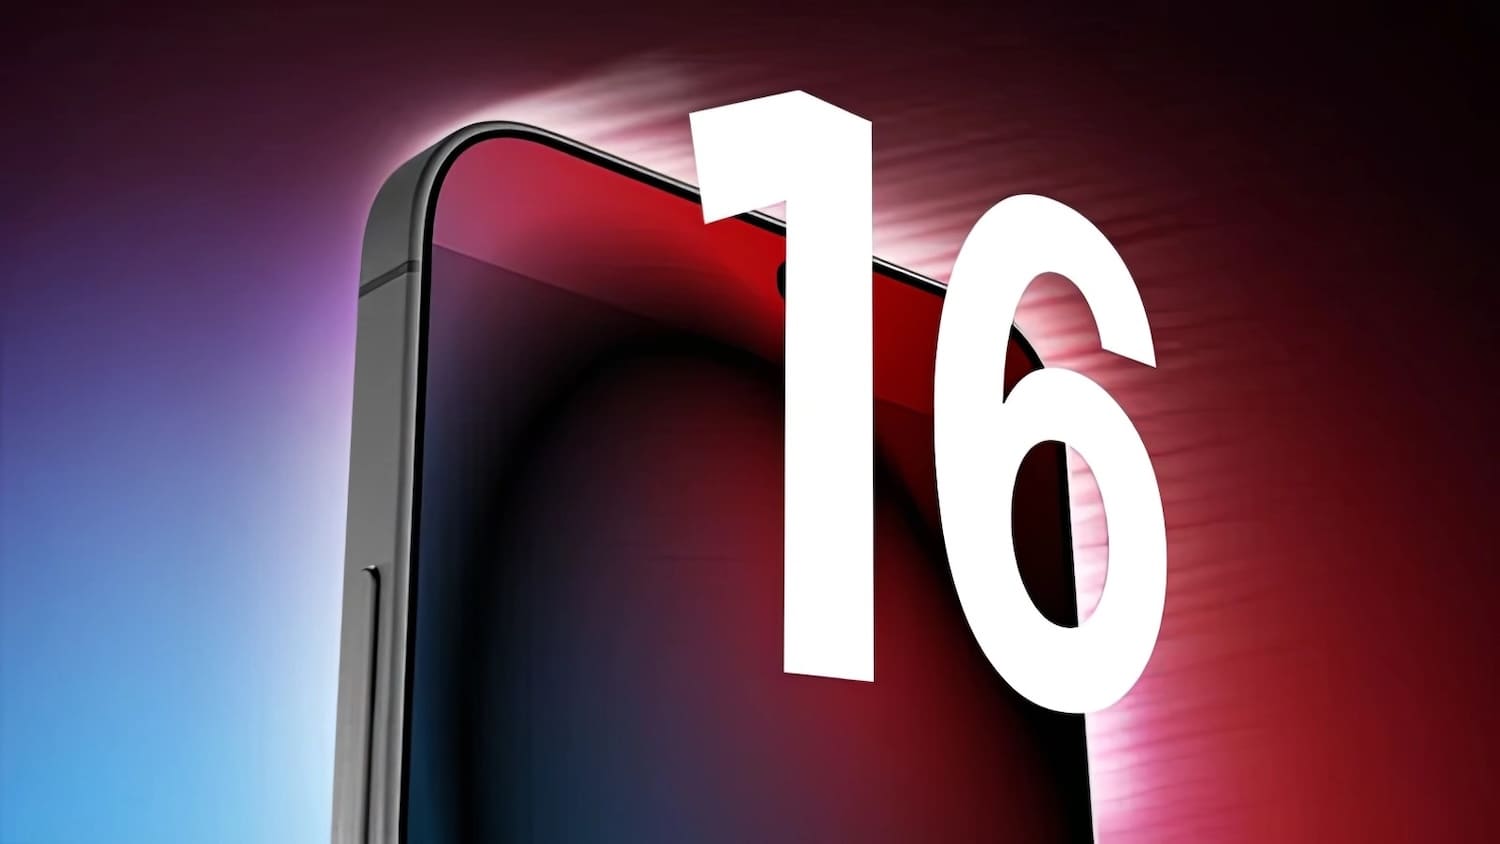 Обзор iPhone 16 (16 Pro и 16 Pro Max) на основе имеющихся утечек и слухов